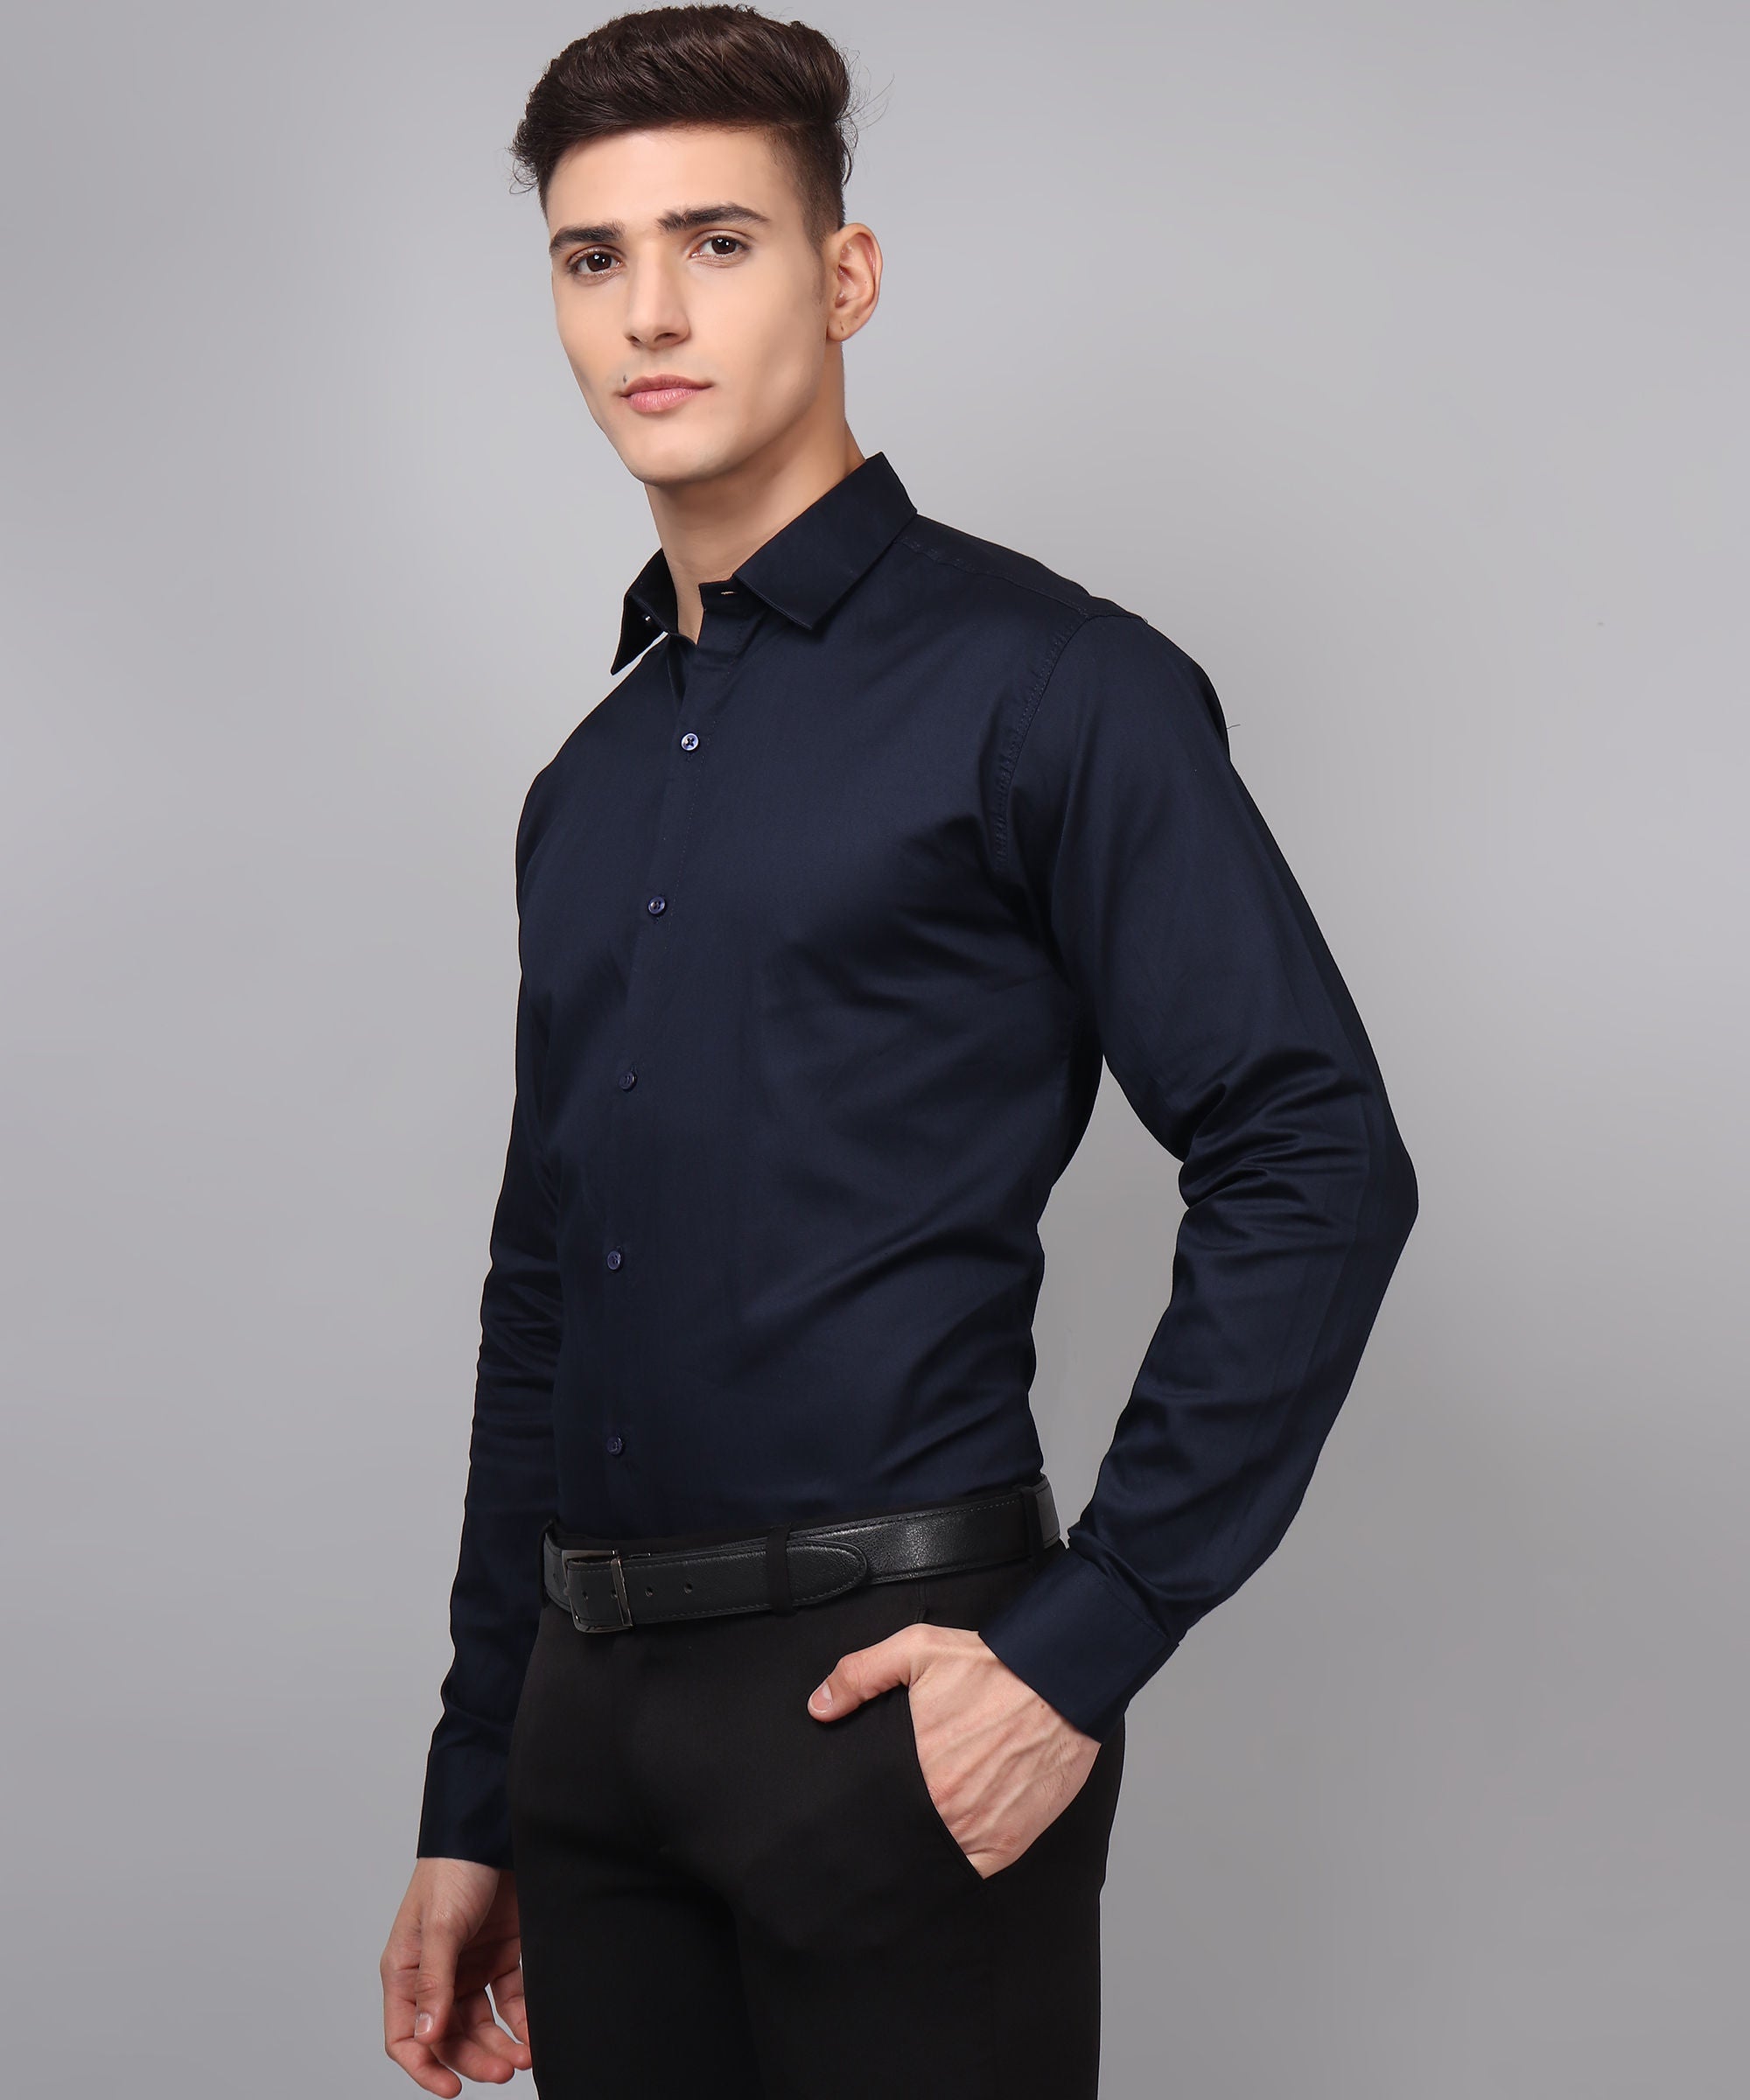 a man wearing a black shirt and black pants